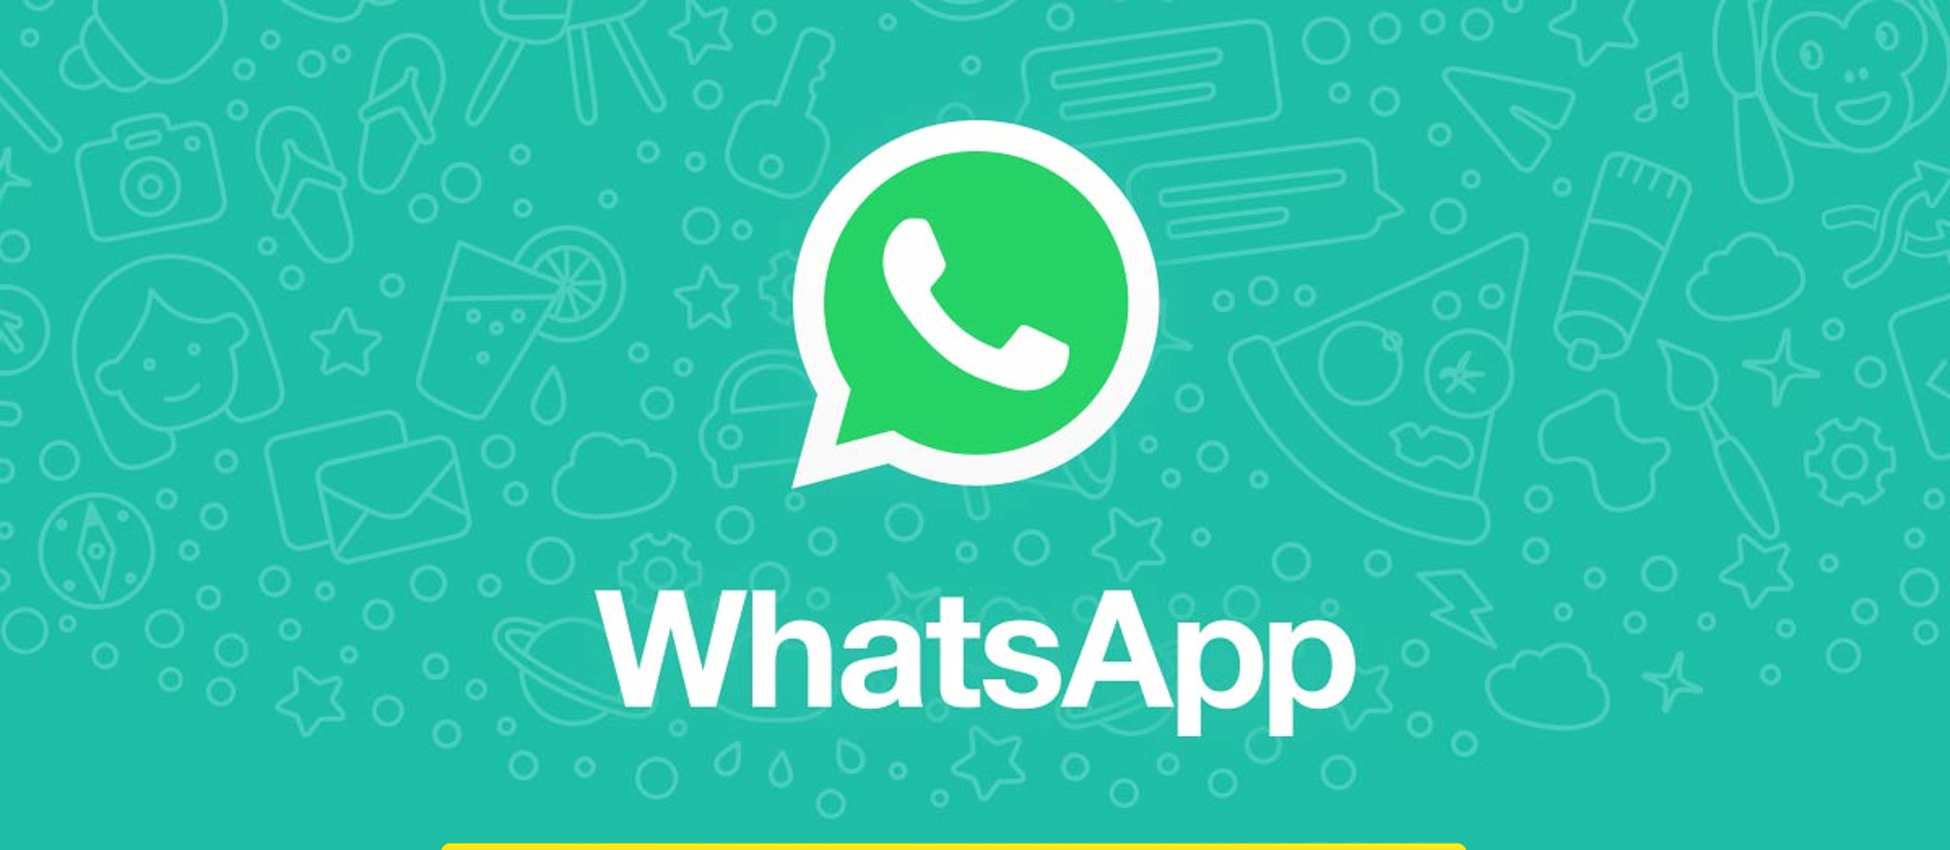 whatsapp business per pc download